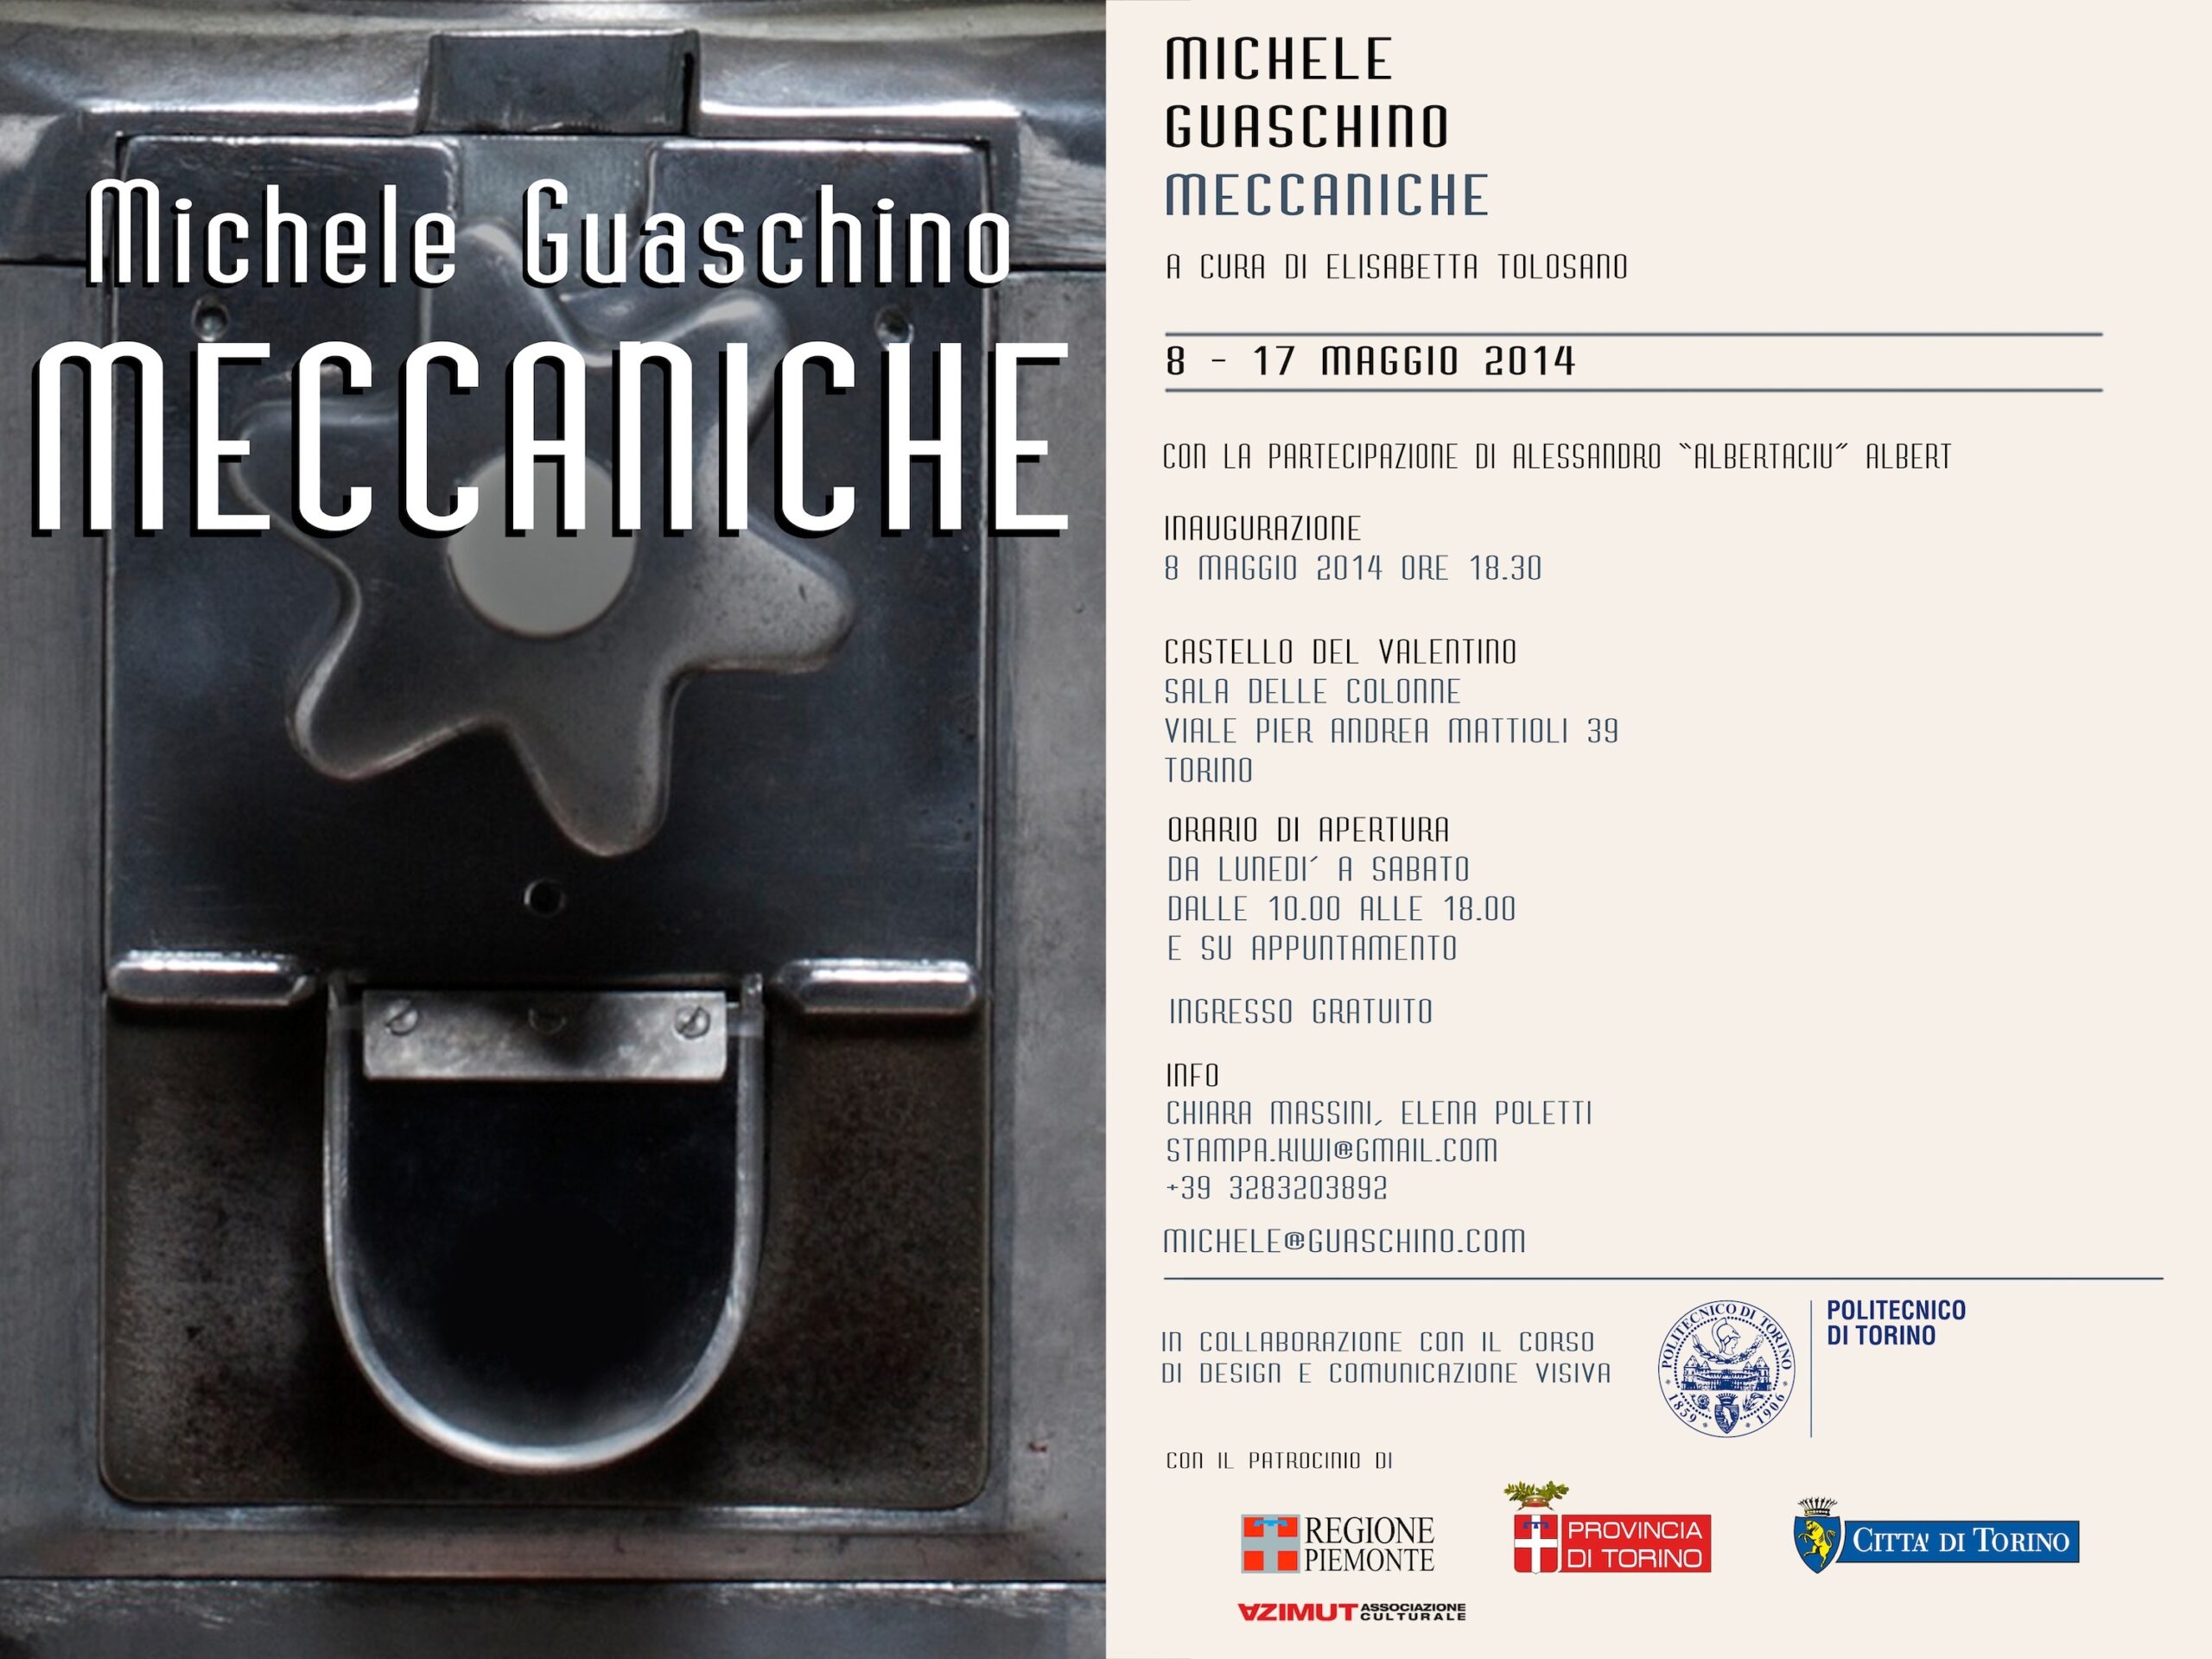 Michele Guaschino - Meccaniche